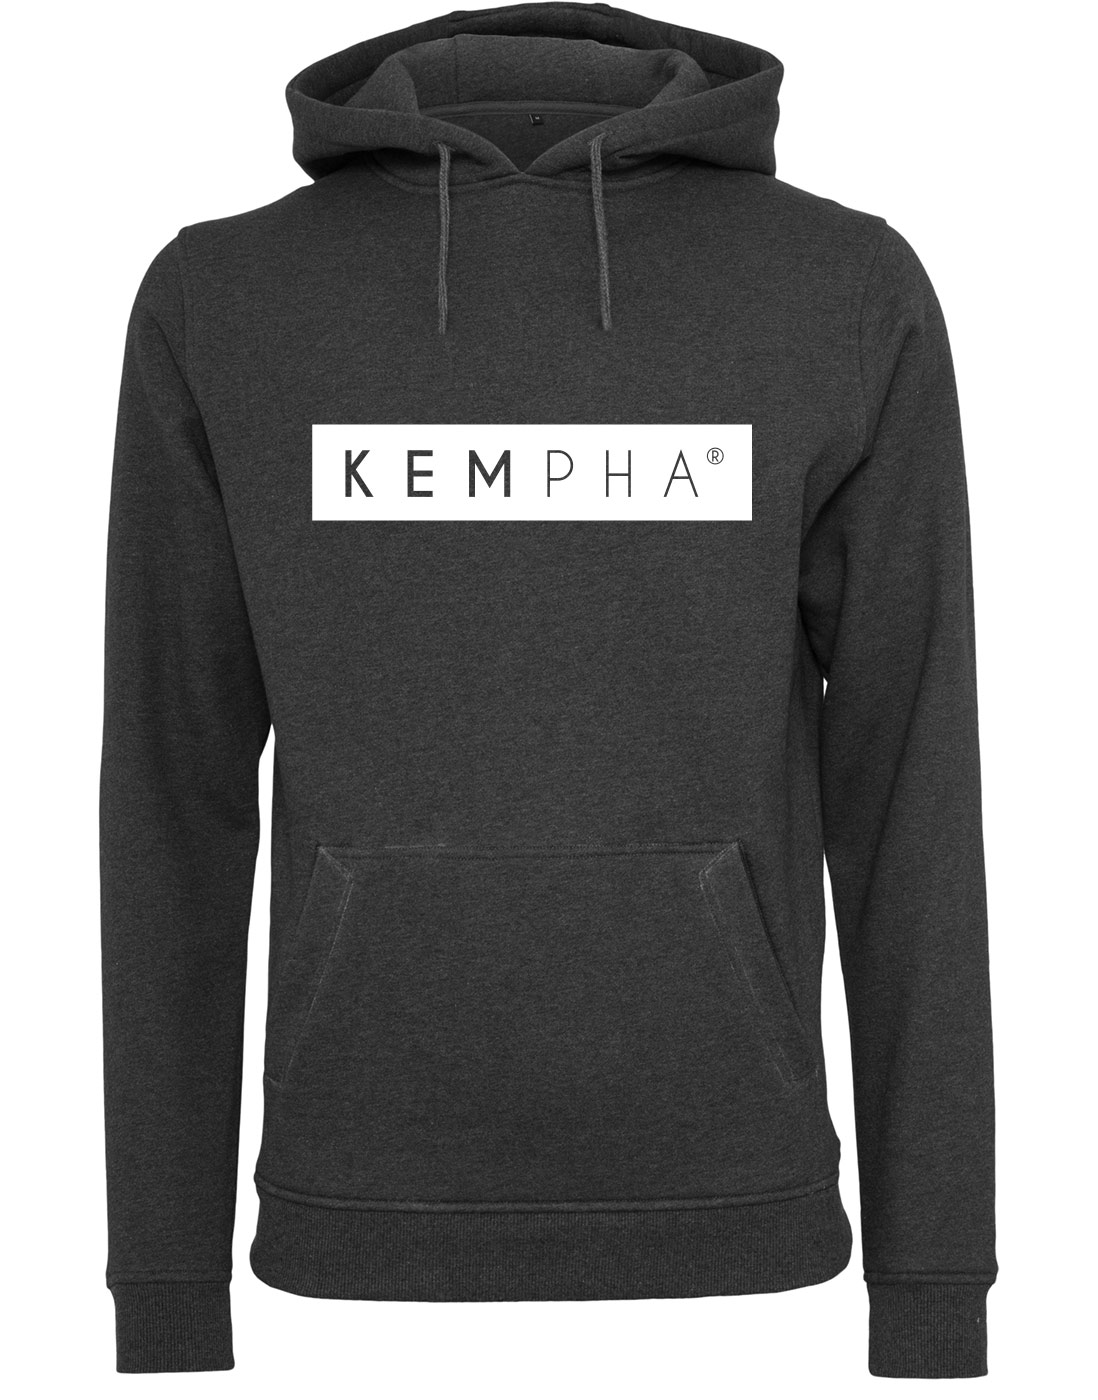 Kempha Premium Hoodie white auf charcoal